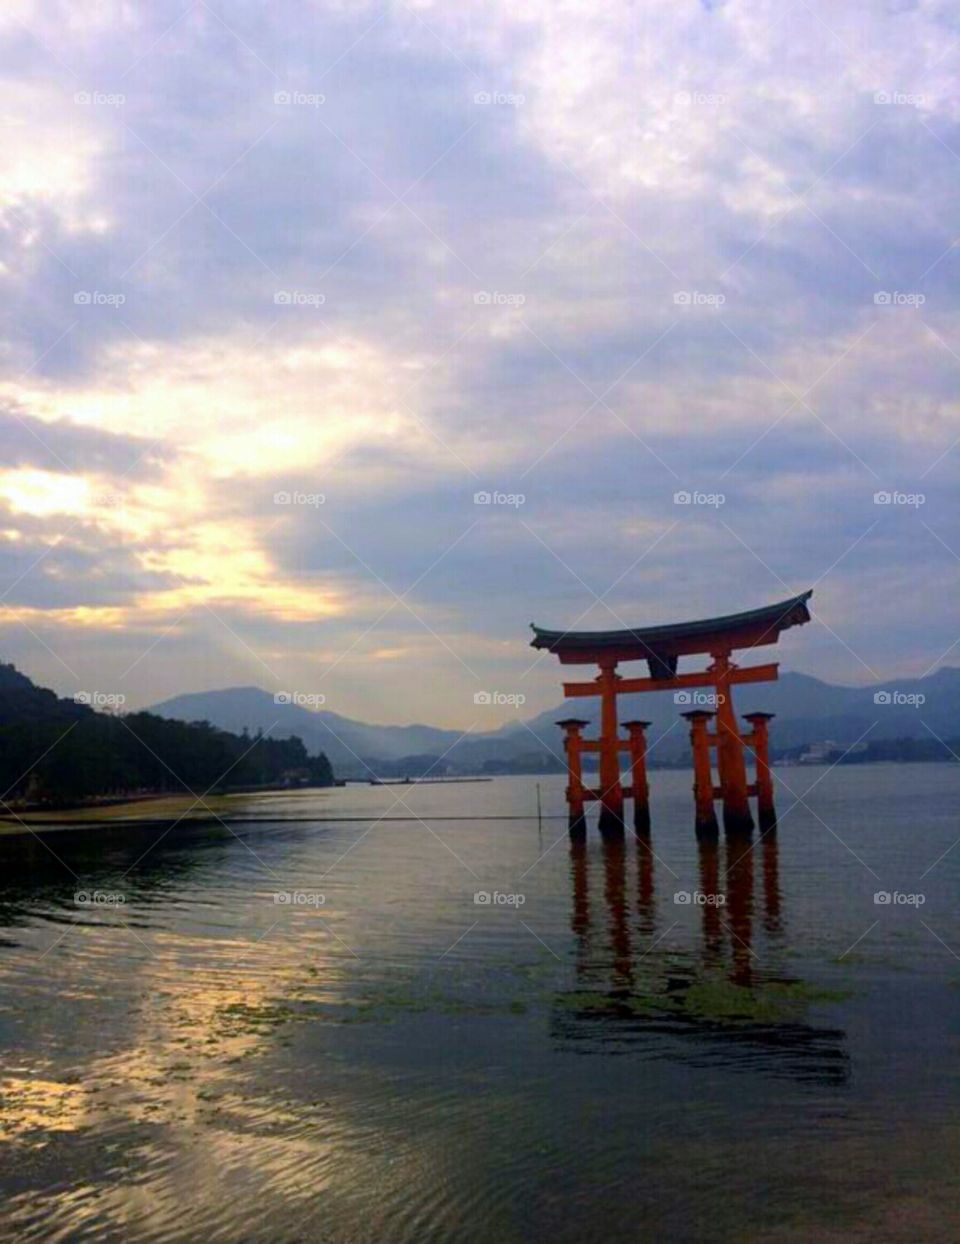 Miyajima Island. Floating torii gate of Miyajima Island in the evening